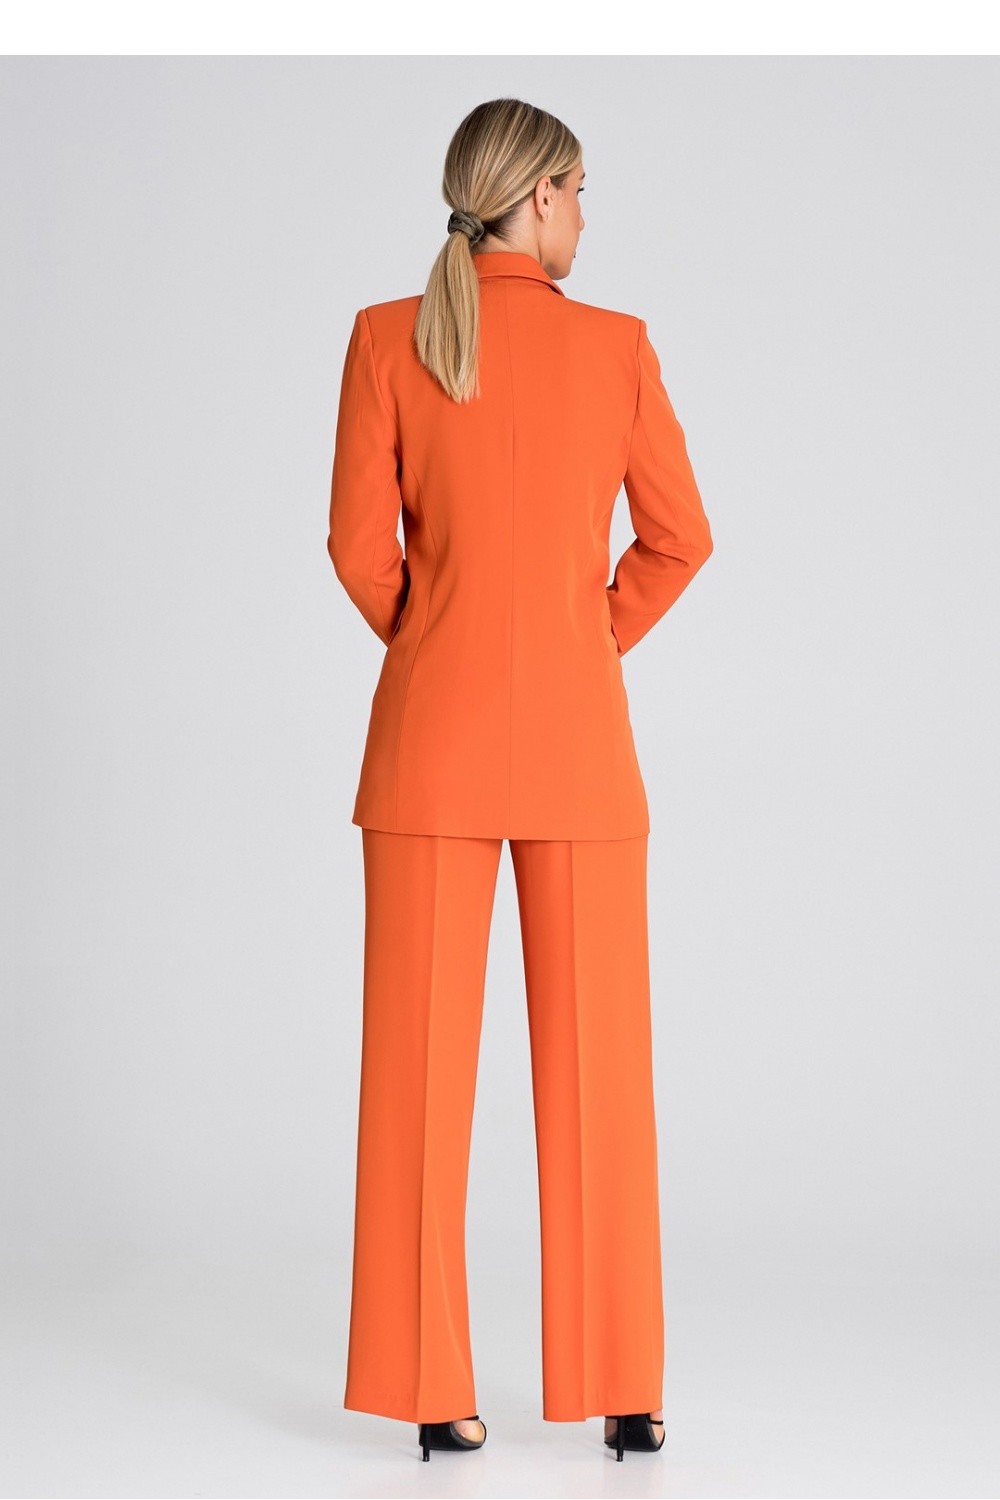  Jacket model 185078 Figl  orange